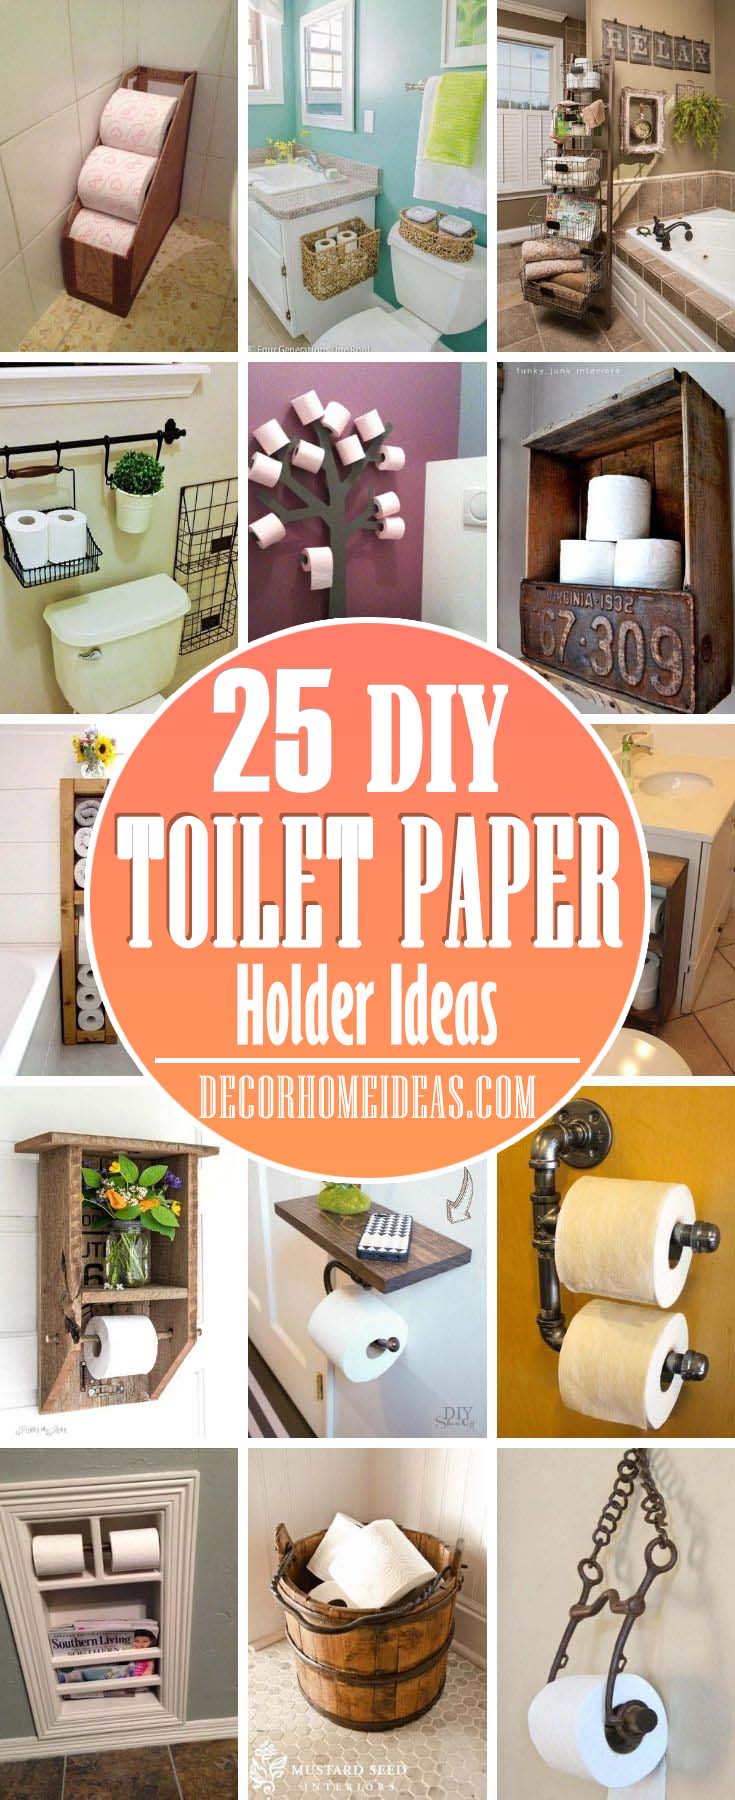 25 Creative Diy Toilet Paper Holder Ideas Decor Home